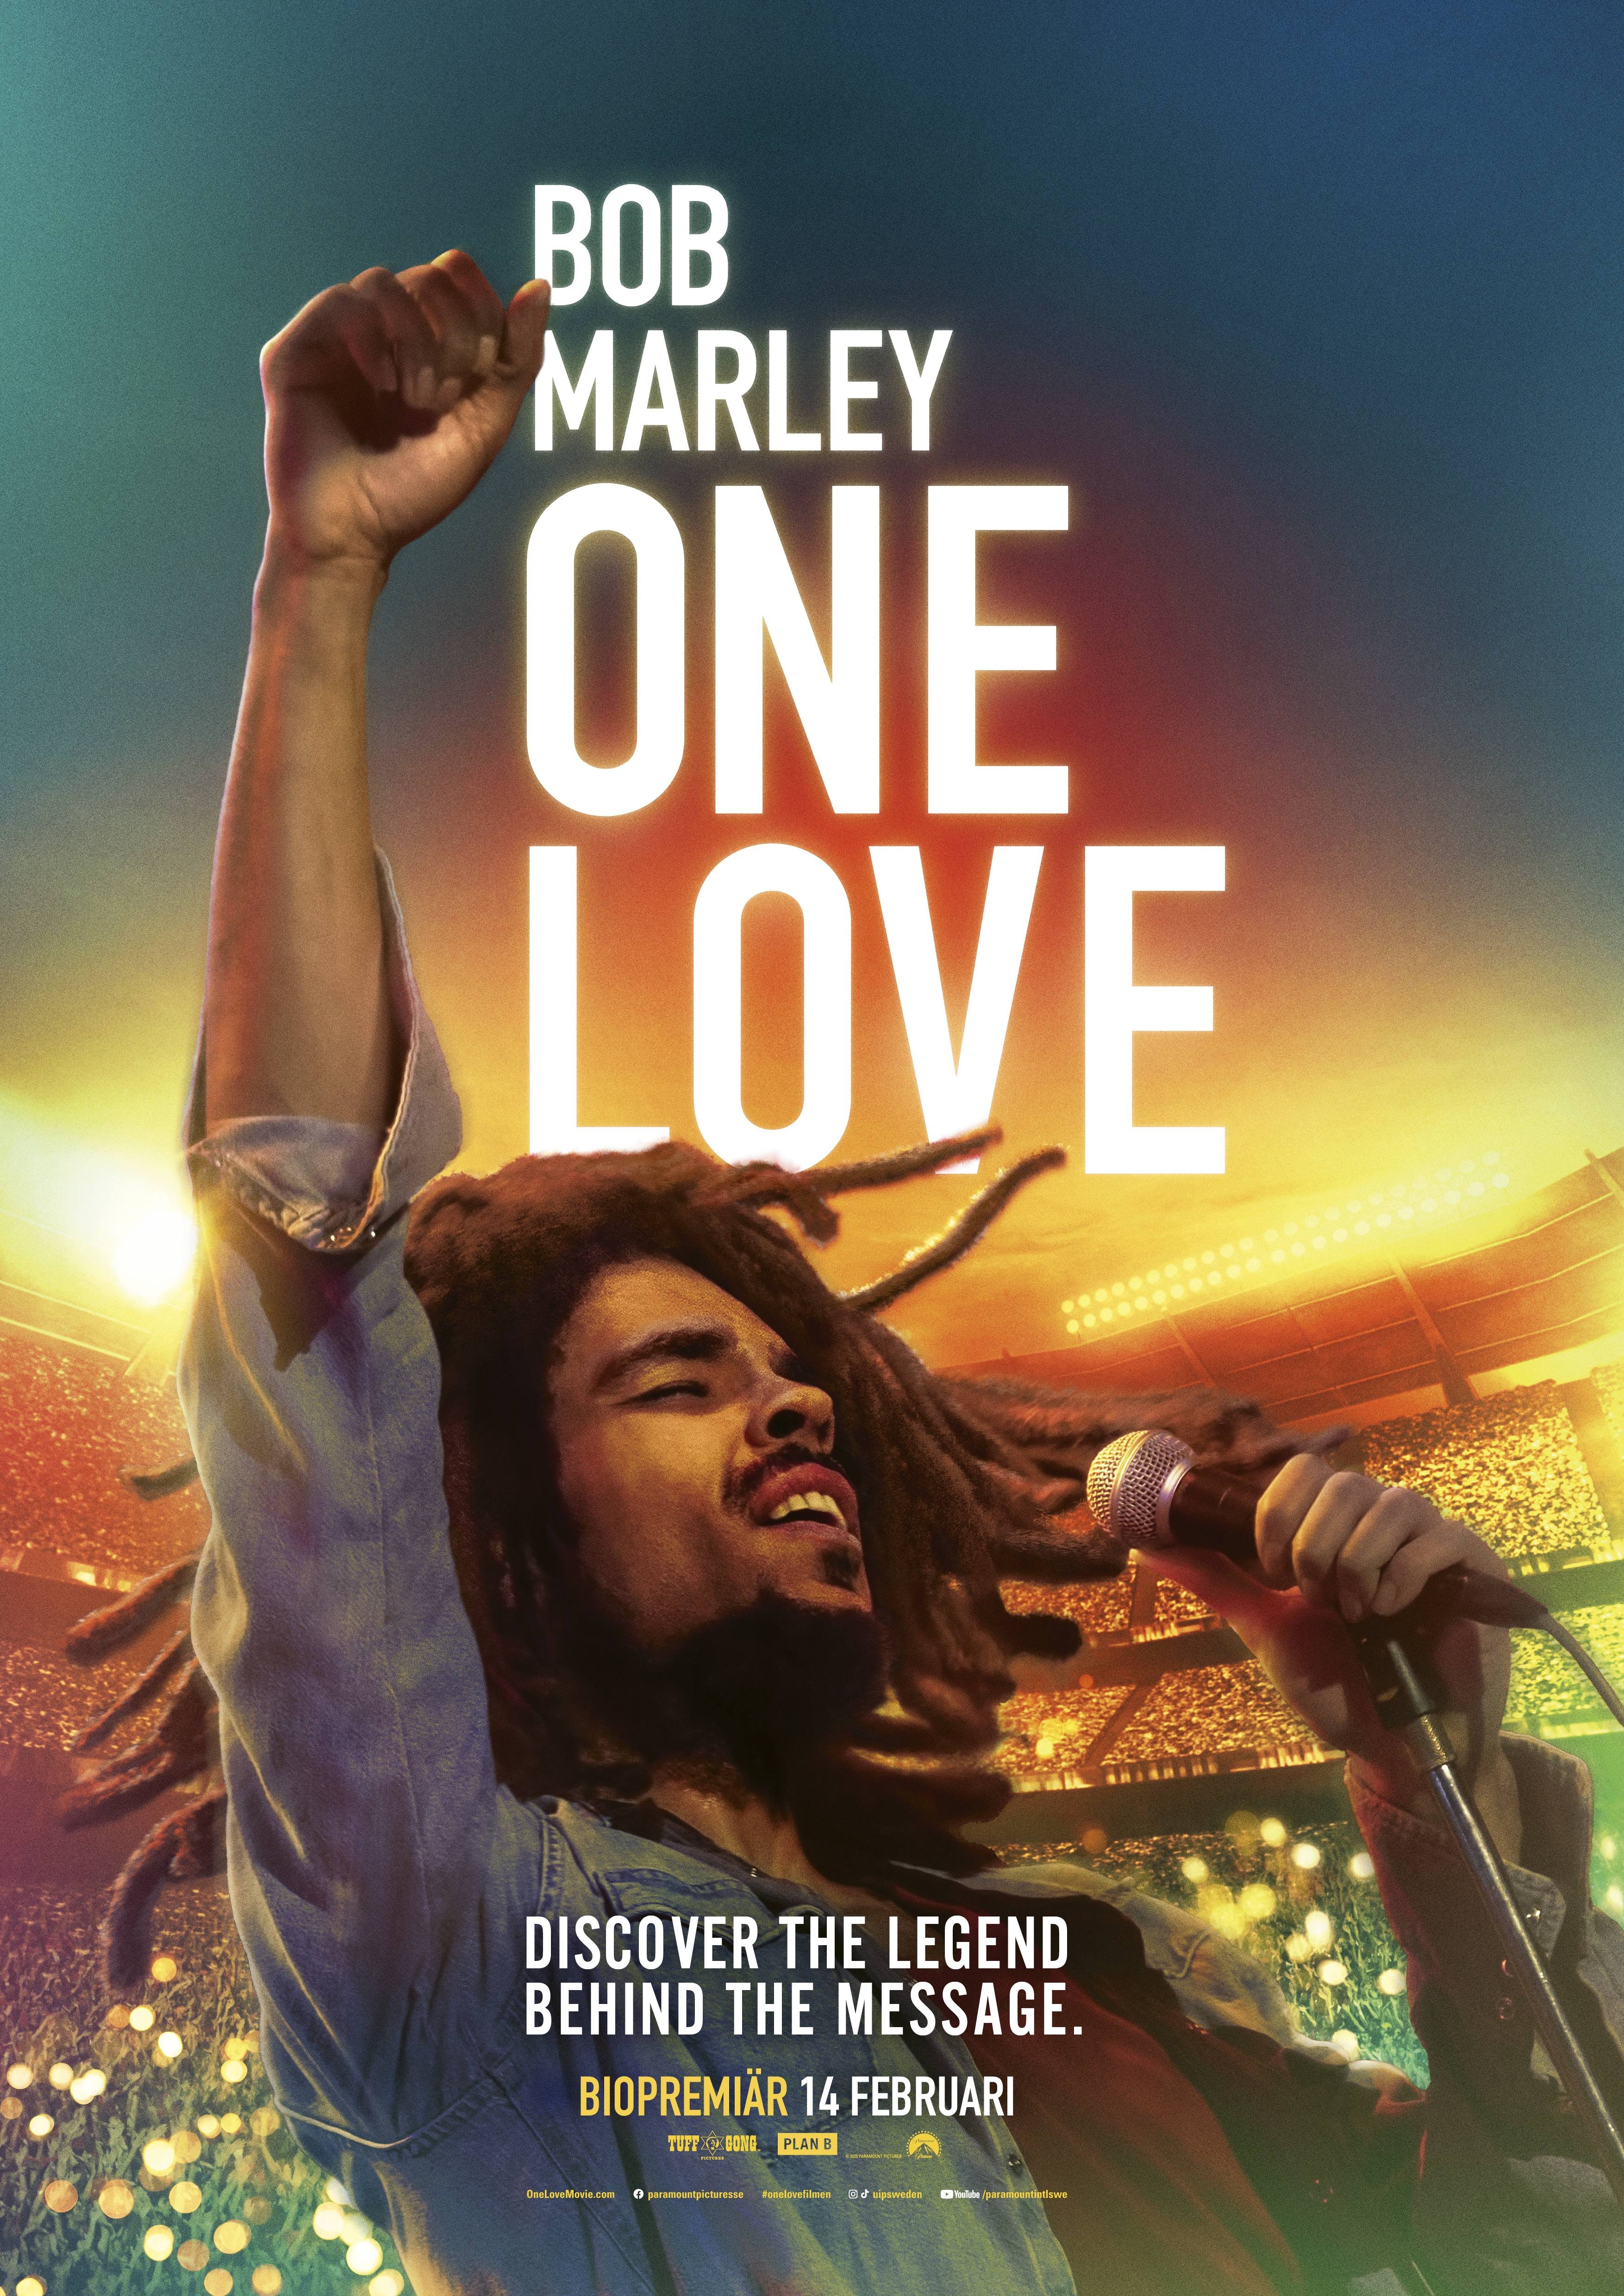 BOB MARELY: ONE LOVE